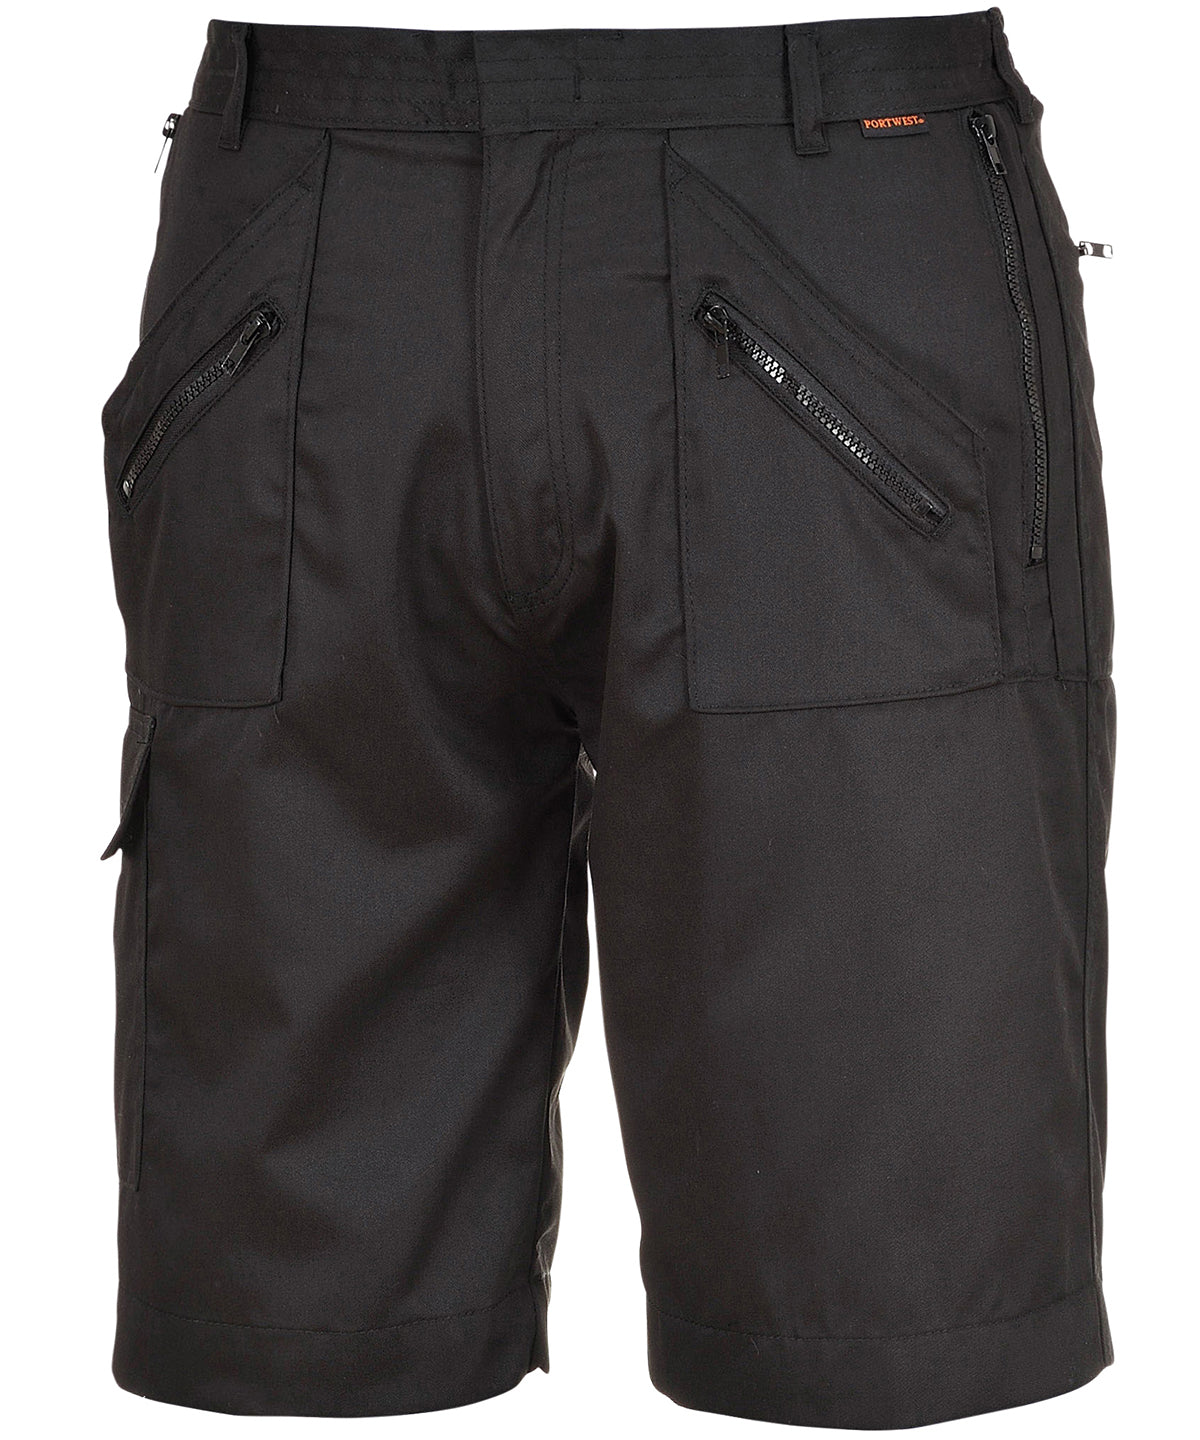 Stuttbuxur - Action Shorts (S889)  Regular Fit